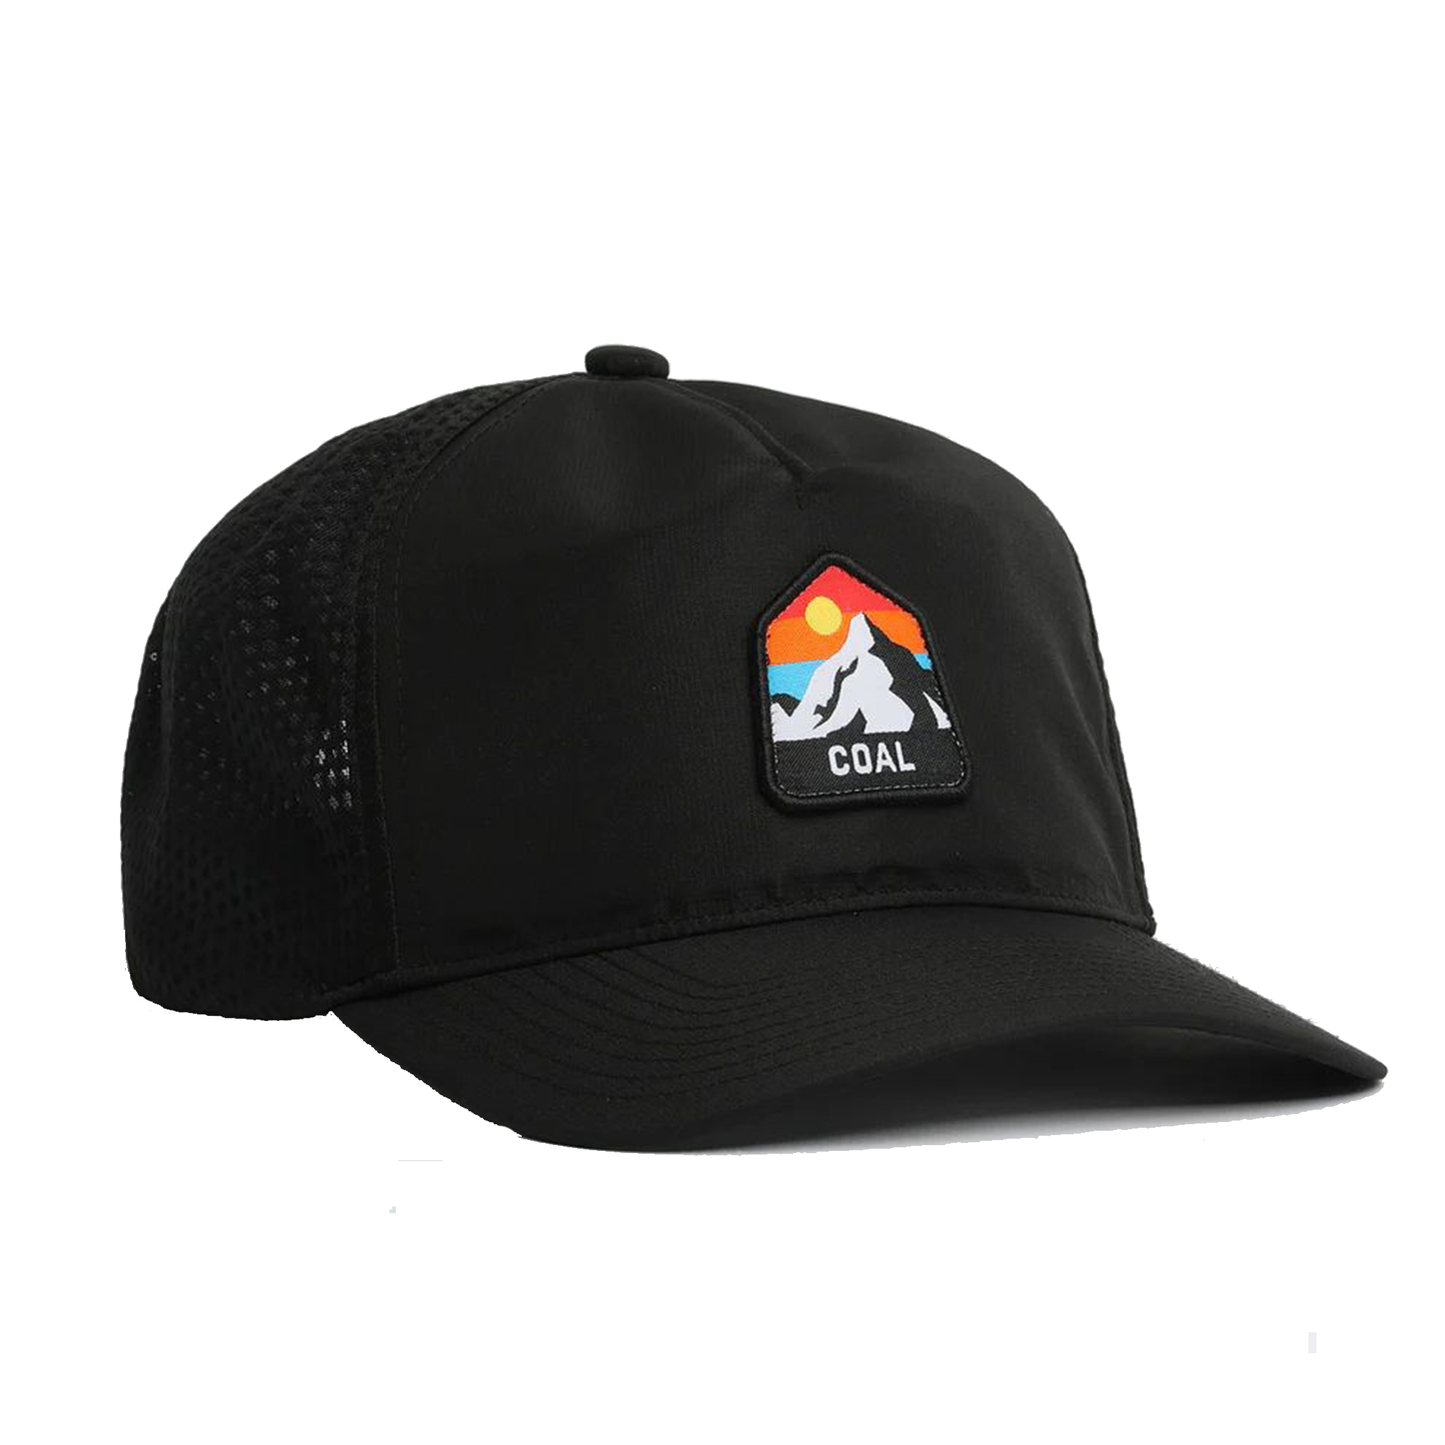 Coal One Peak Hat Black OS Hats